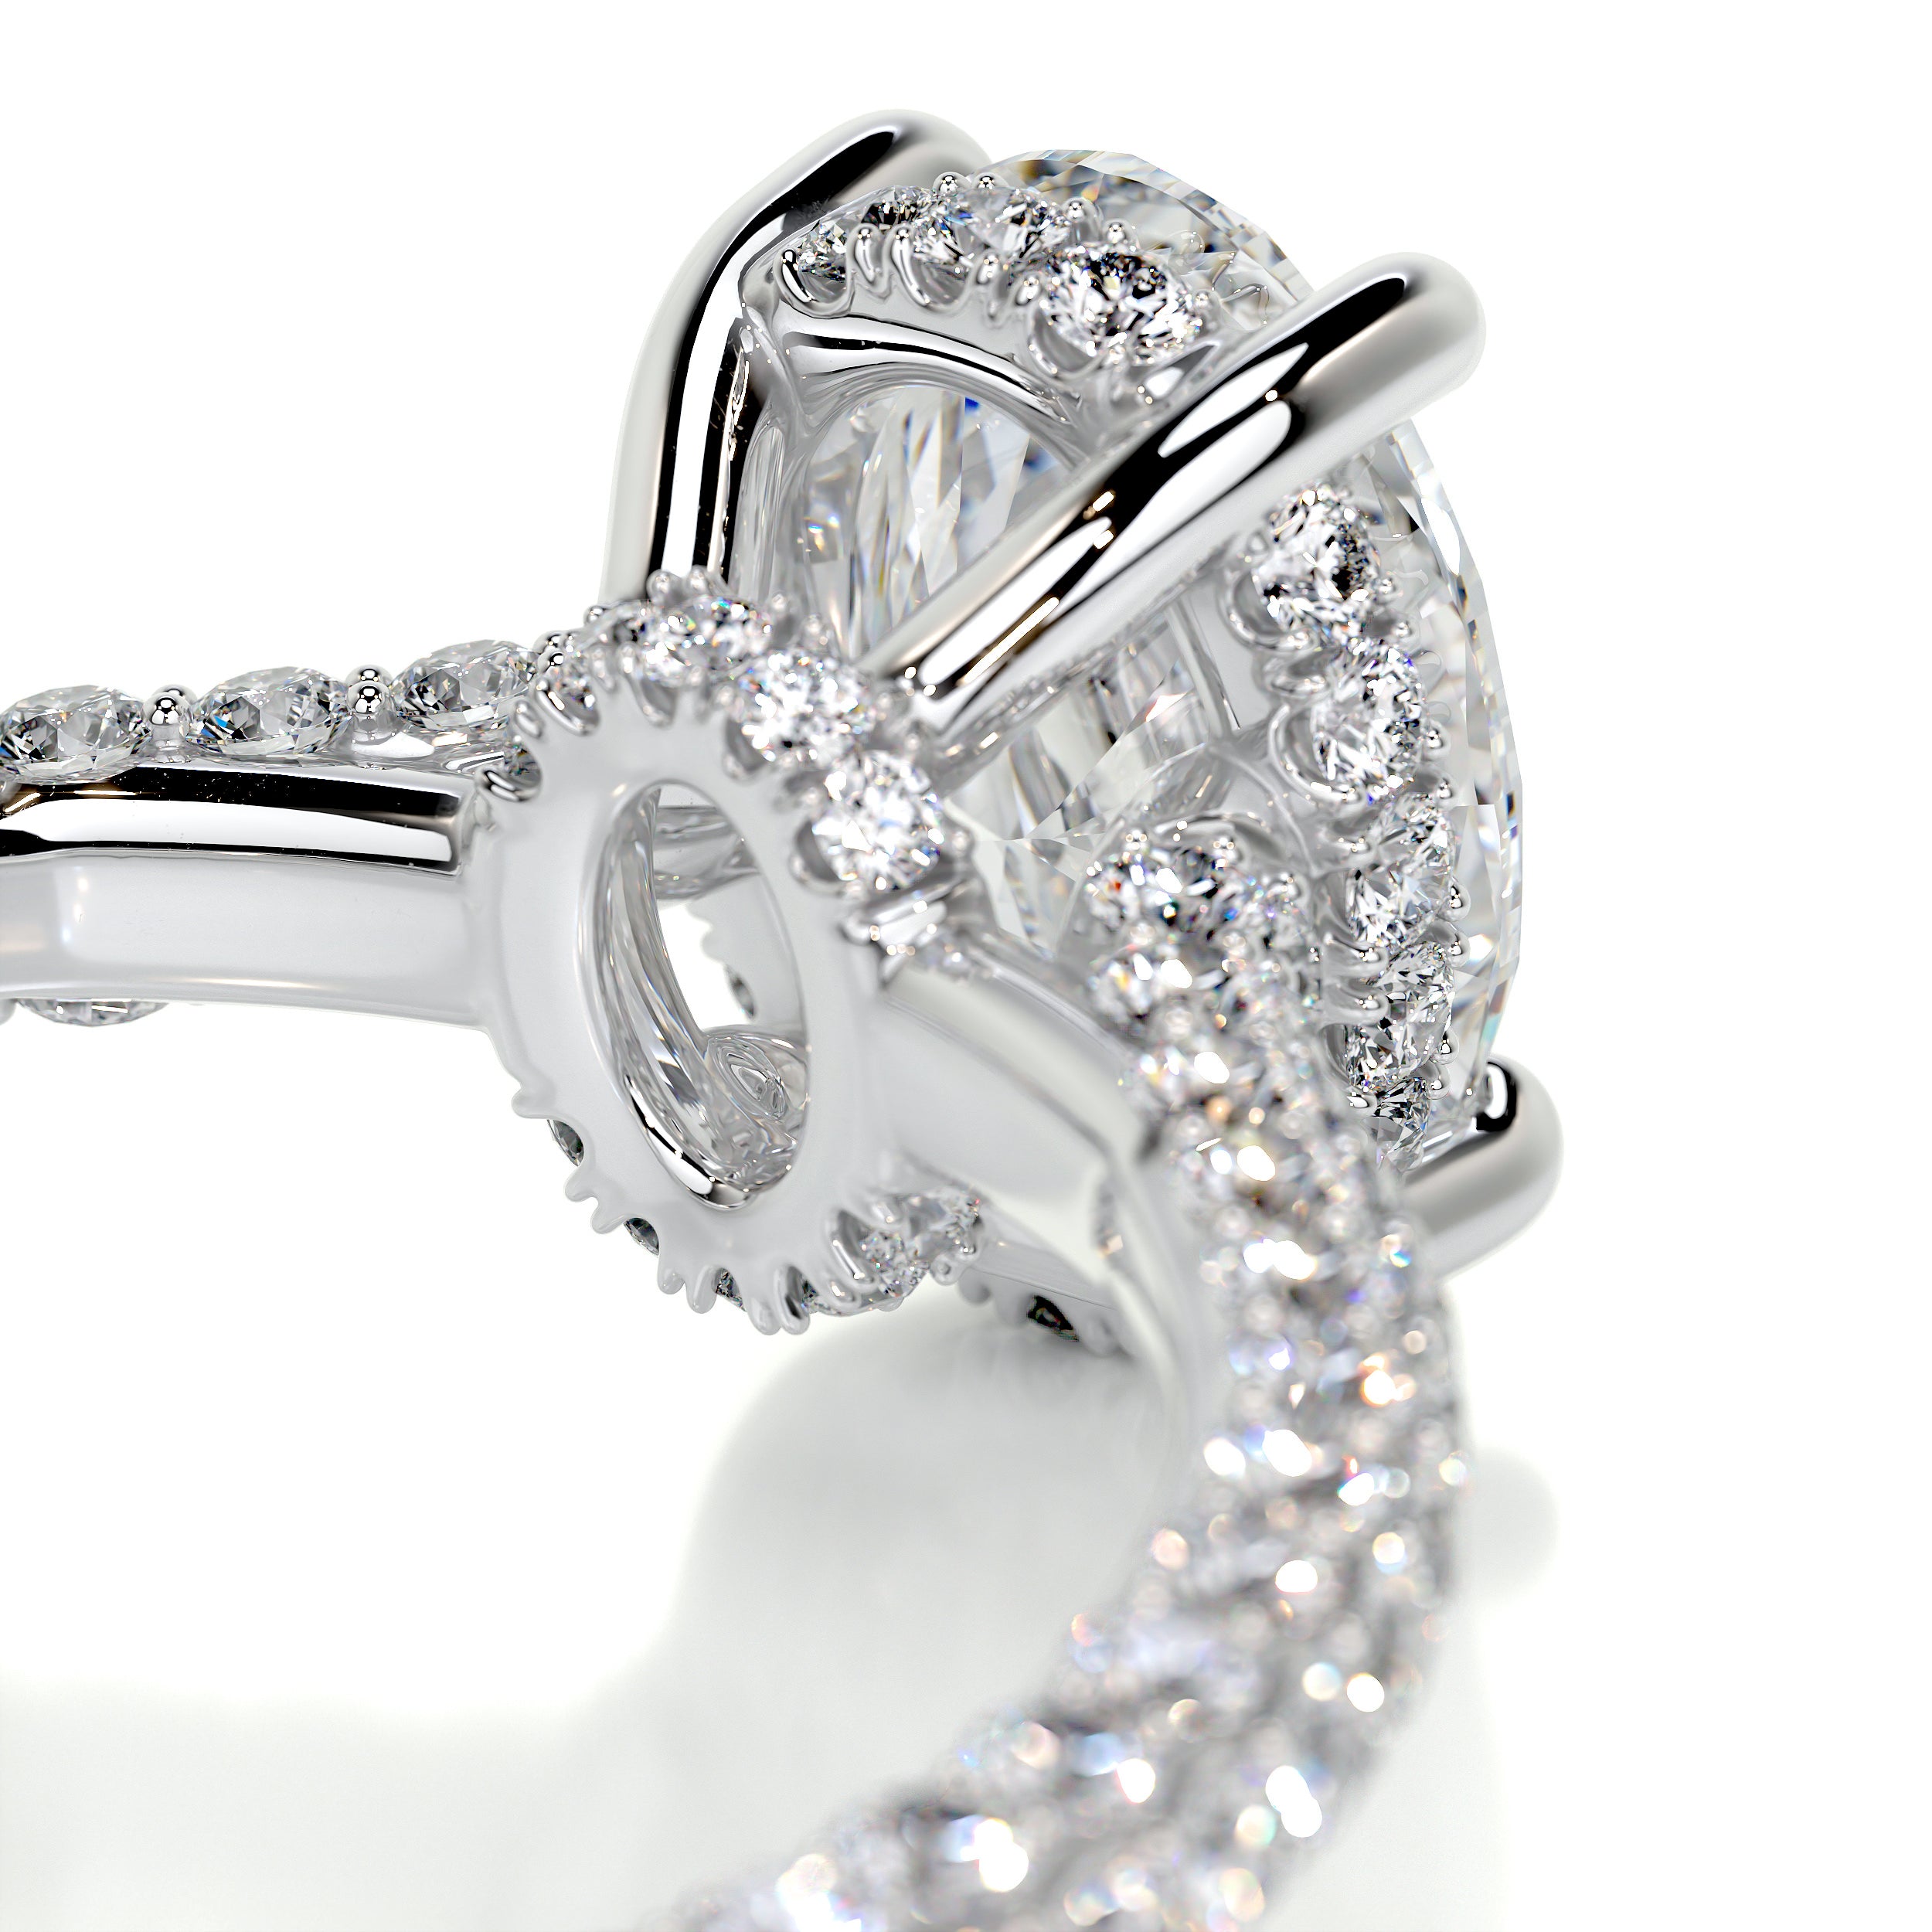 Rebecca Diamond Engagement Ring -18K White Gold